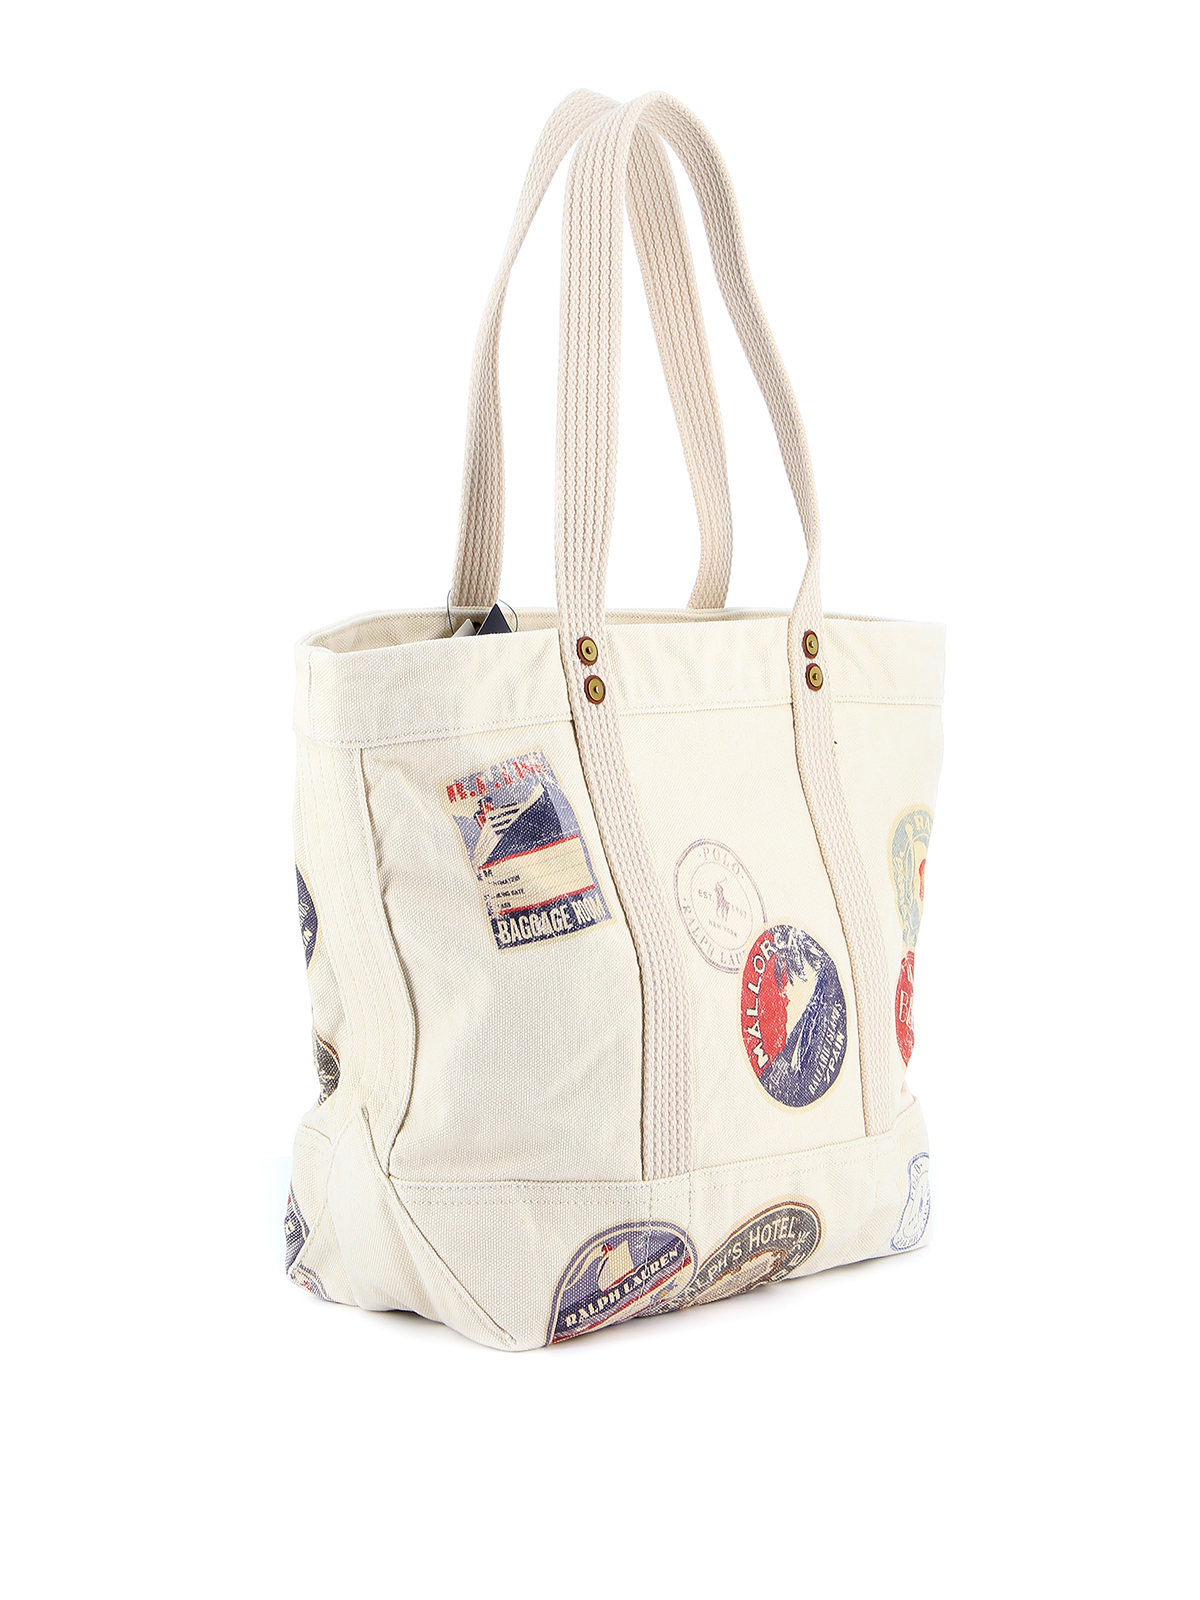 ergens Onaangenaam Acht Totes bags Polo Ralph Lauren - Printed cotton shopping bag - 428783372001